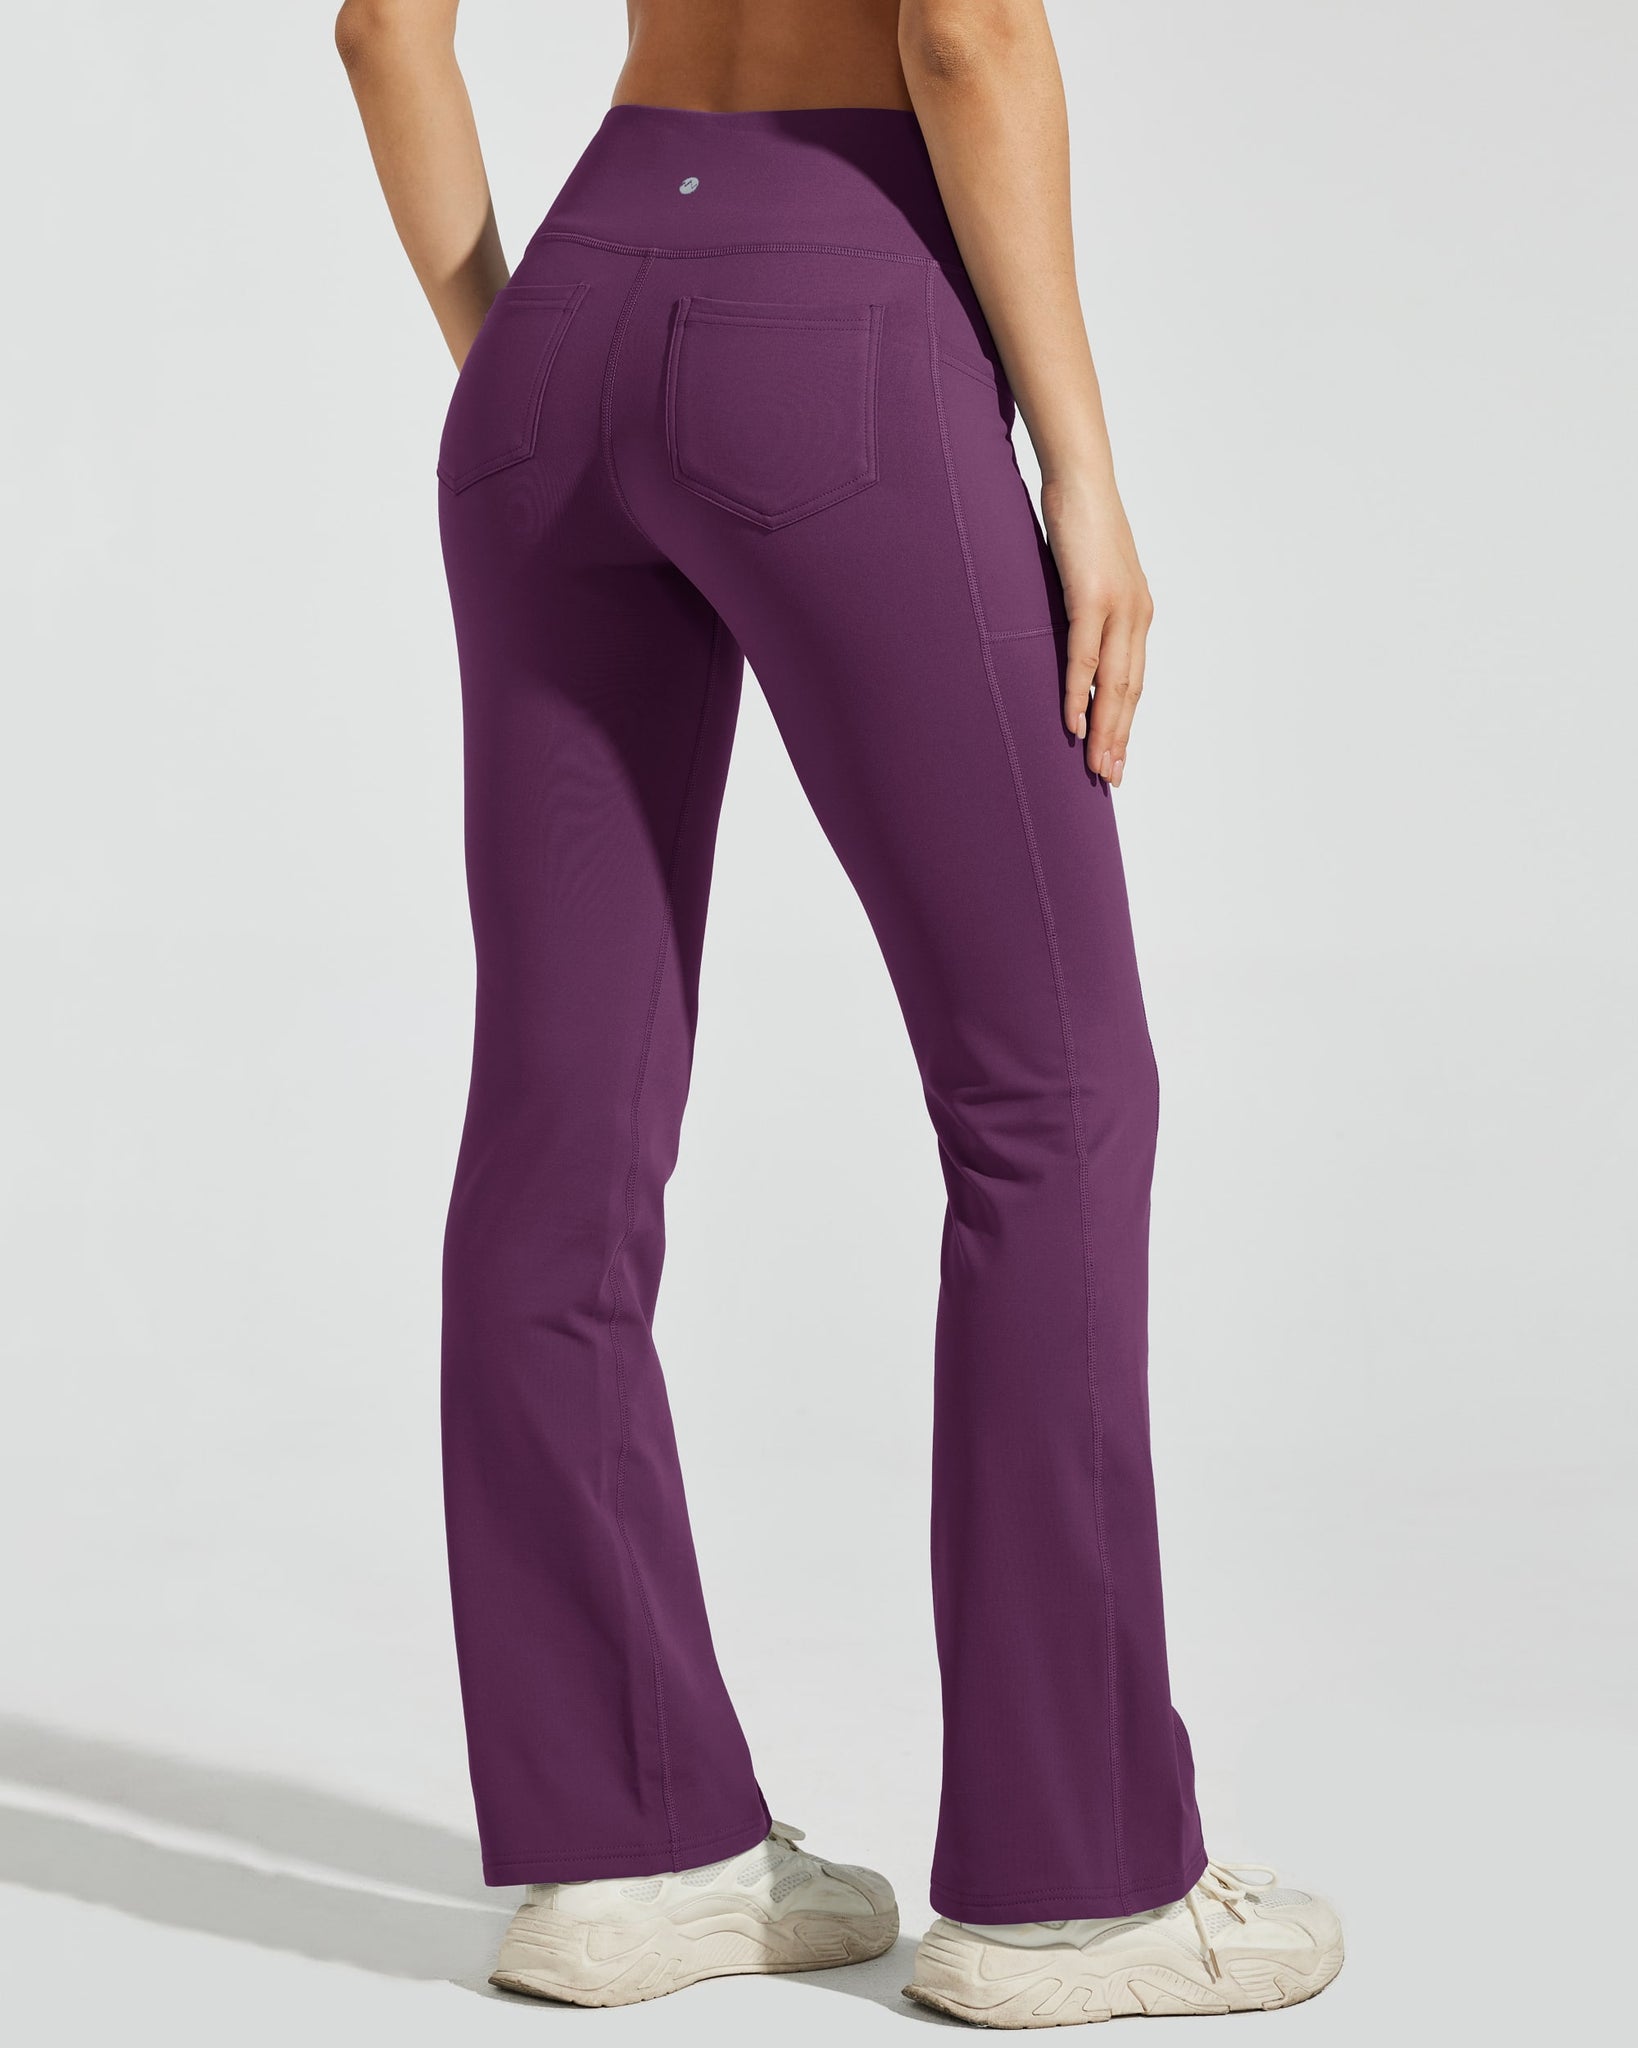 Women's Fleece Lined Bootcut Yoga Pants_Purple_model2